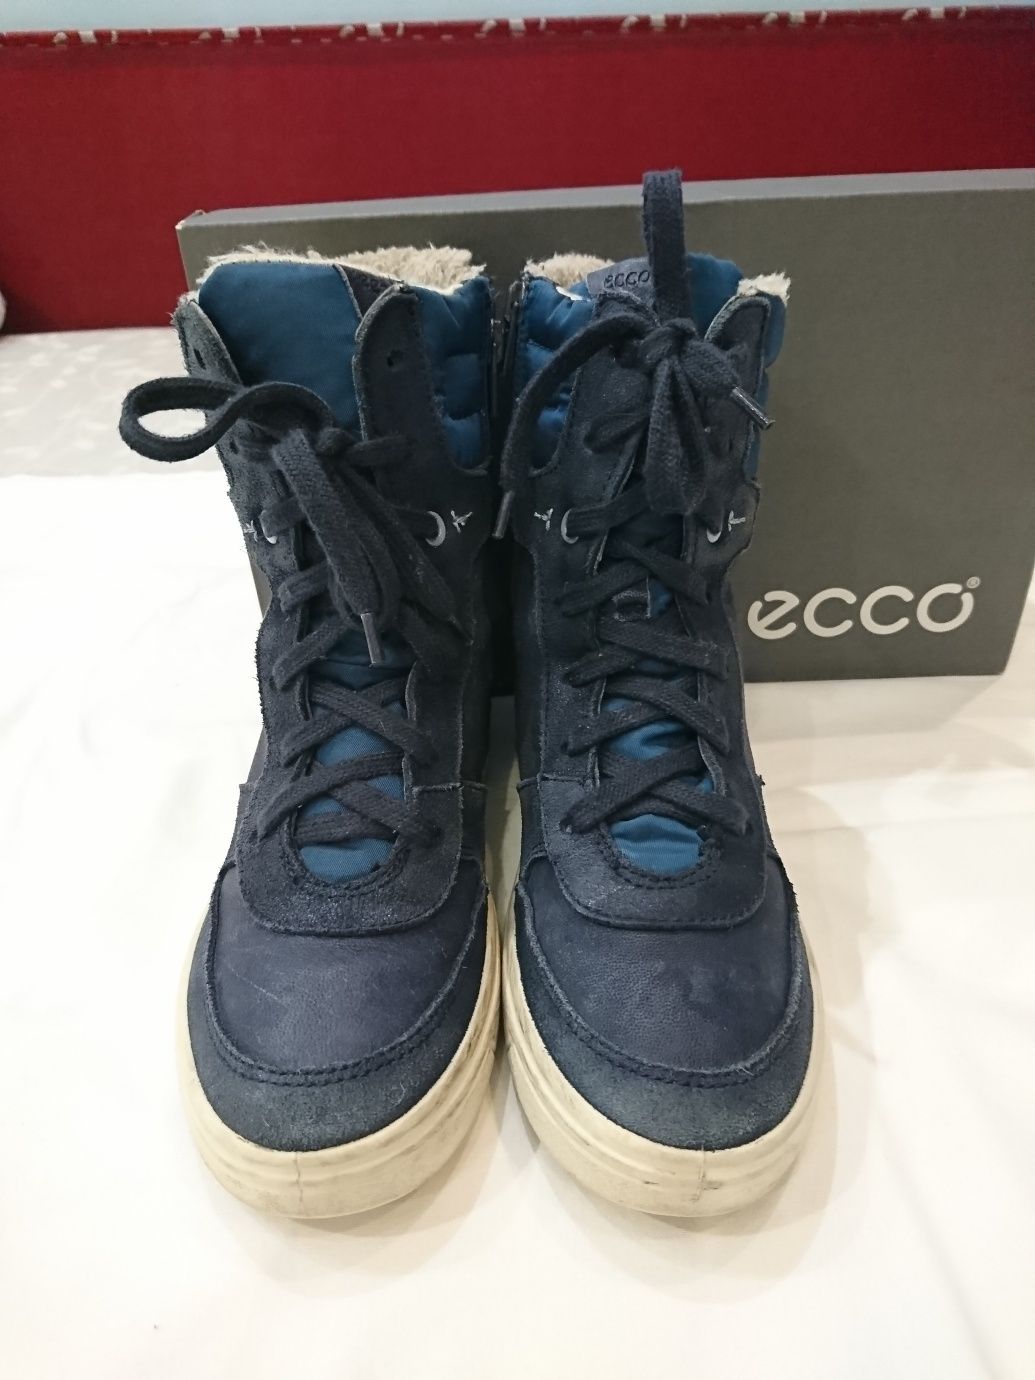 Черевики, чоботи зимові, ботинки высокие, зимние Ecco р. 34